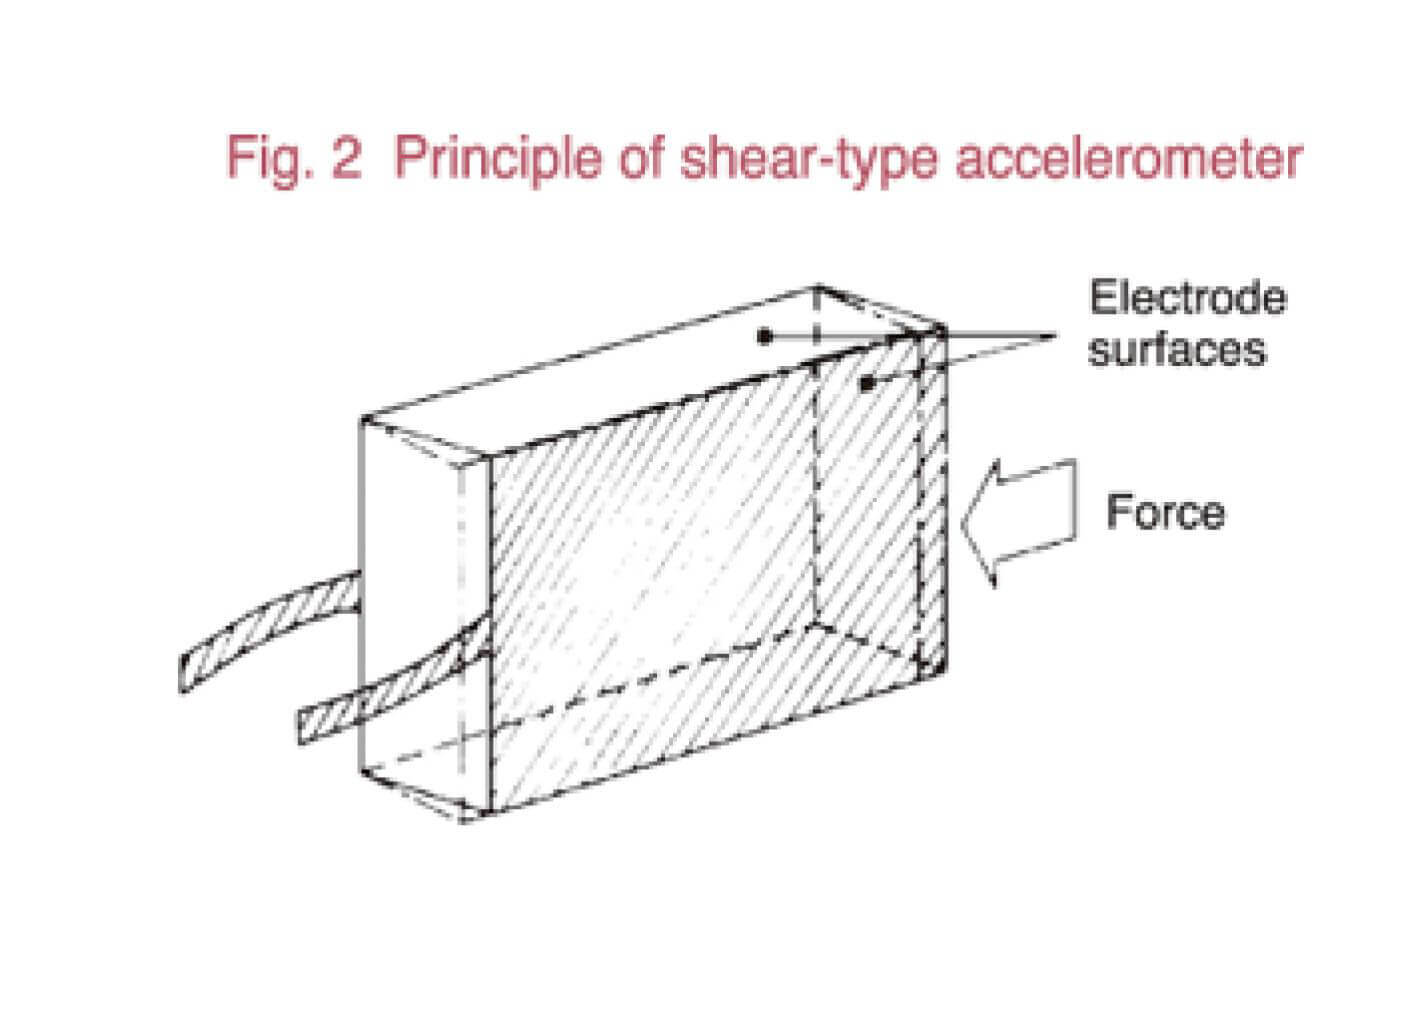 Principle of shear-type accelerometer